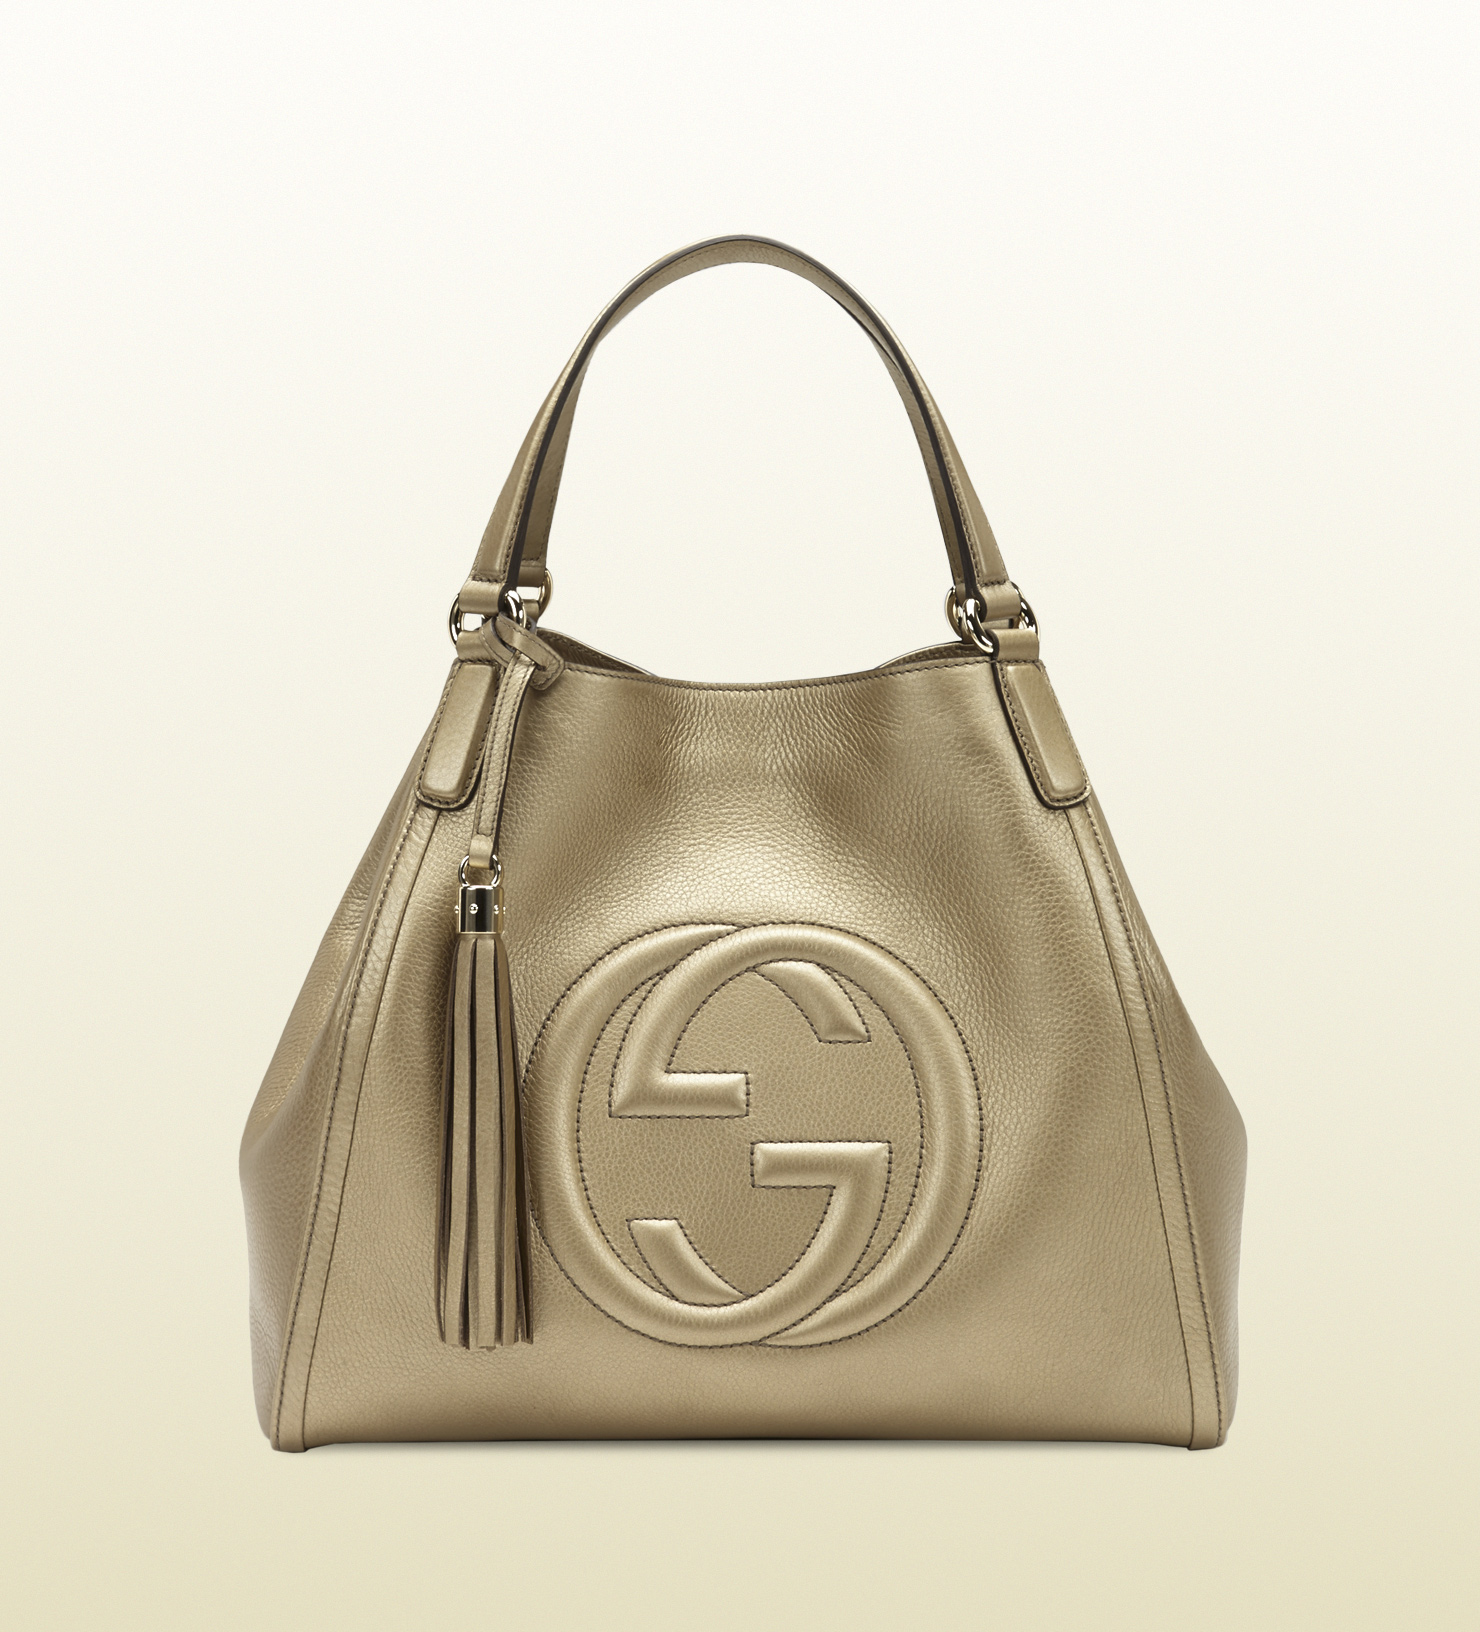 Gucci Soho Metallic Leather Shoulder Bag in Beige (Natural) - Lyst